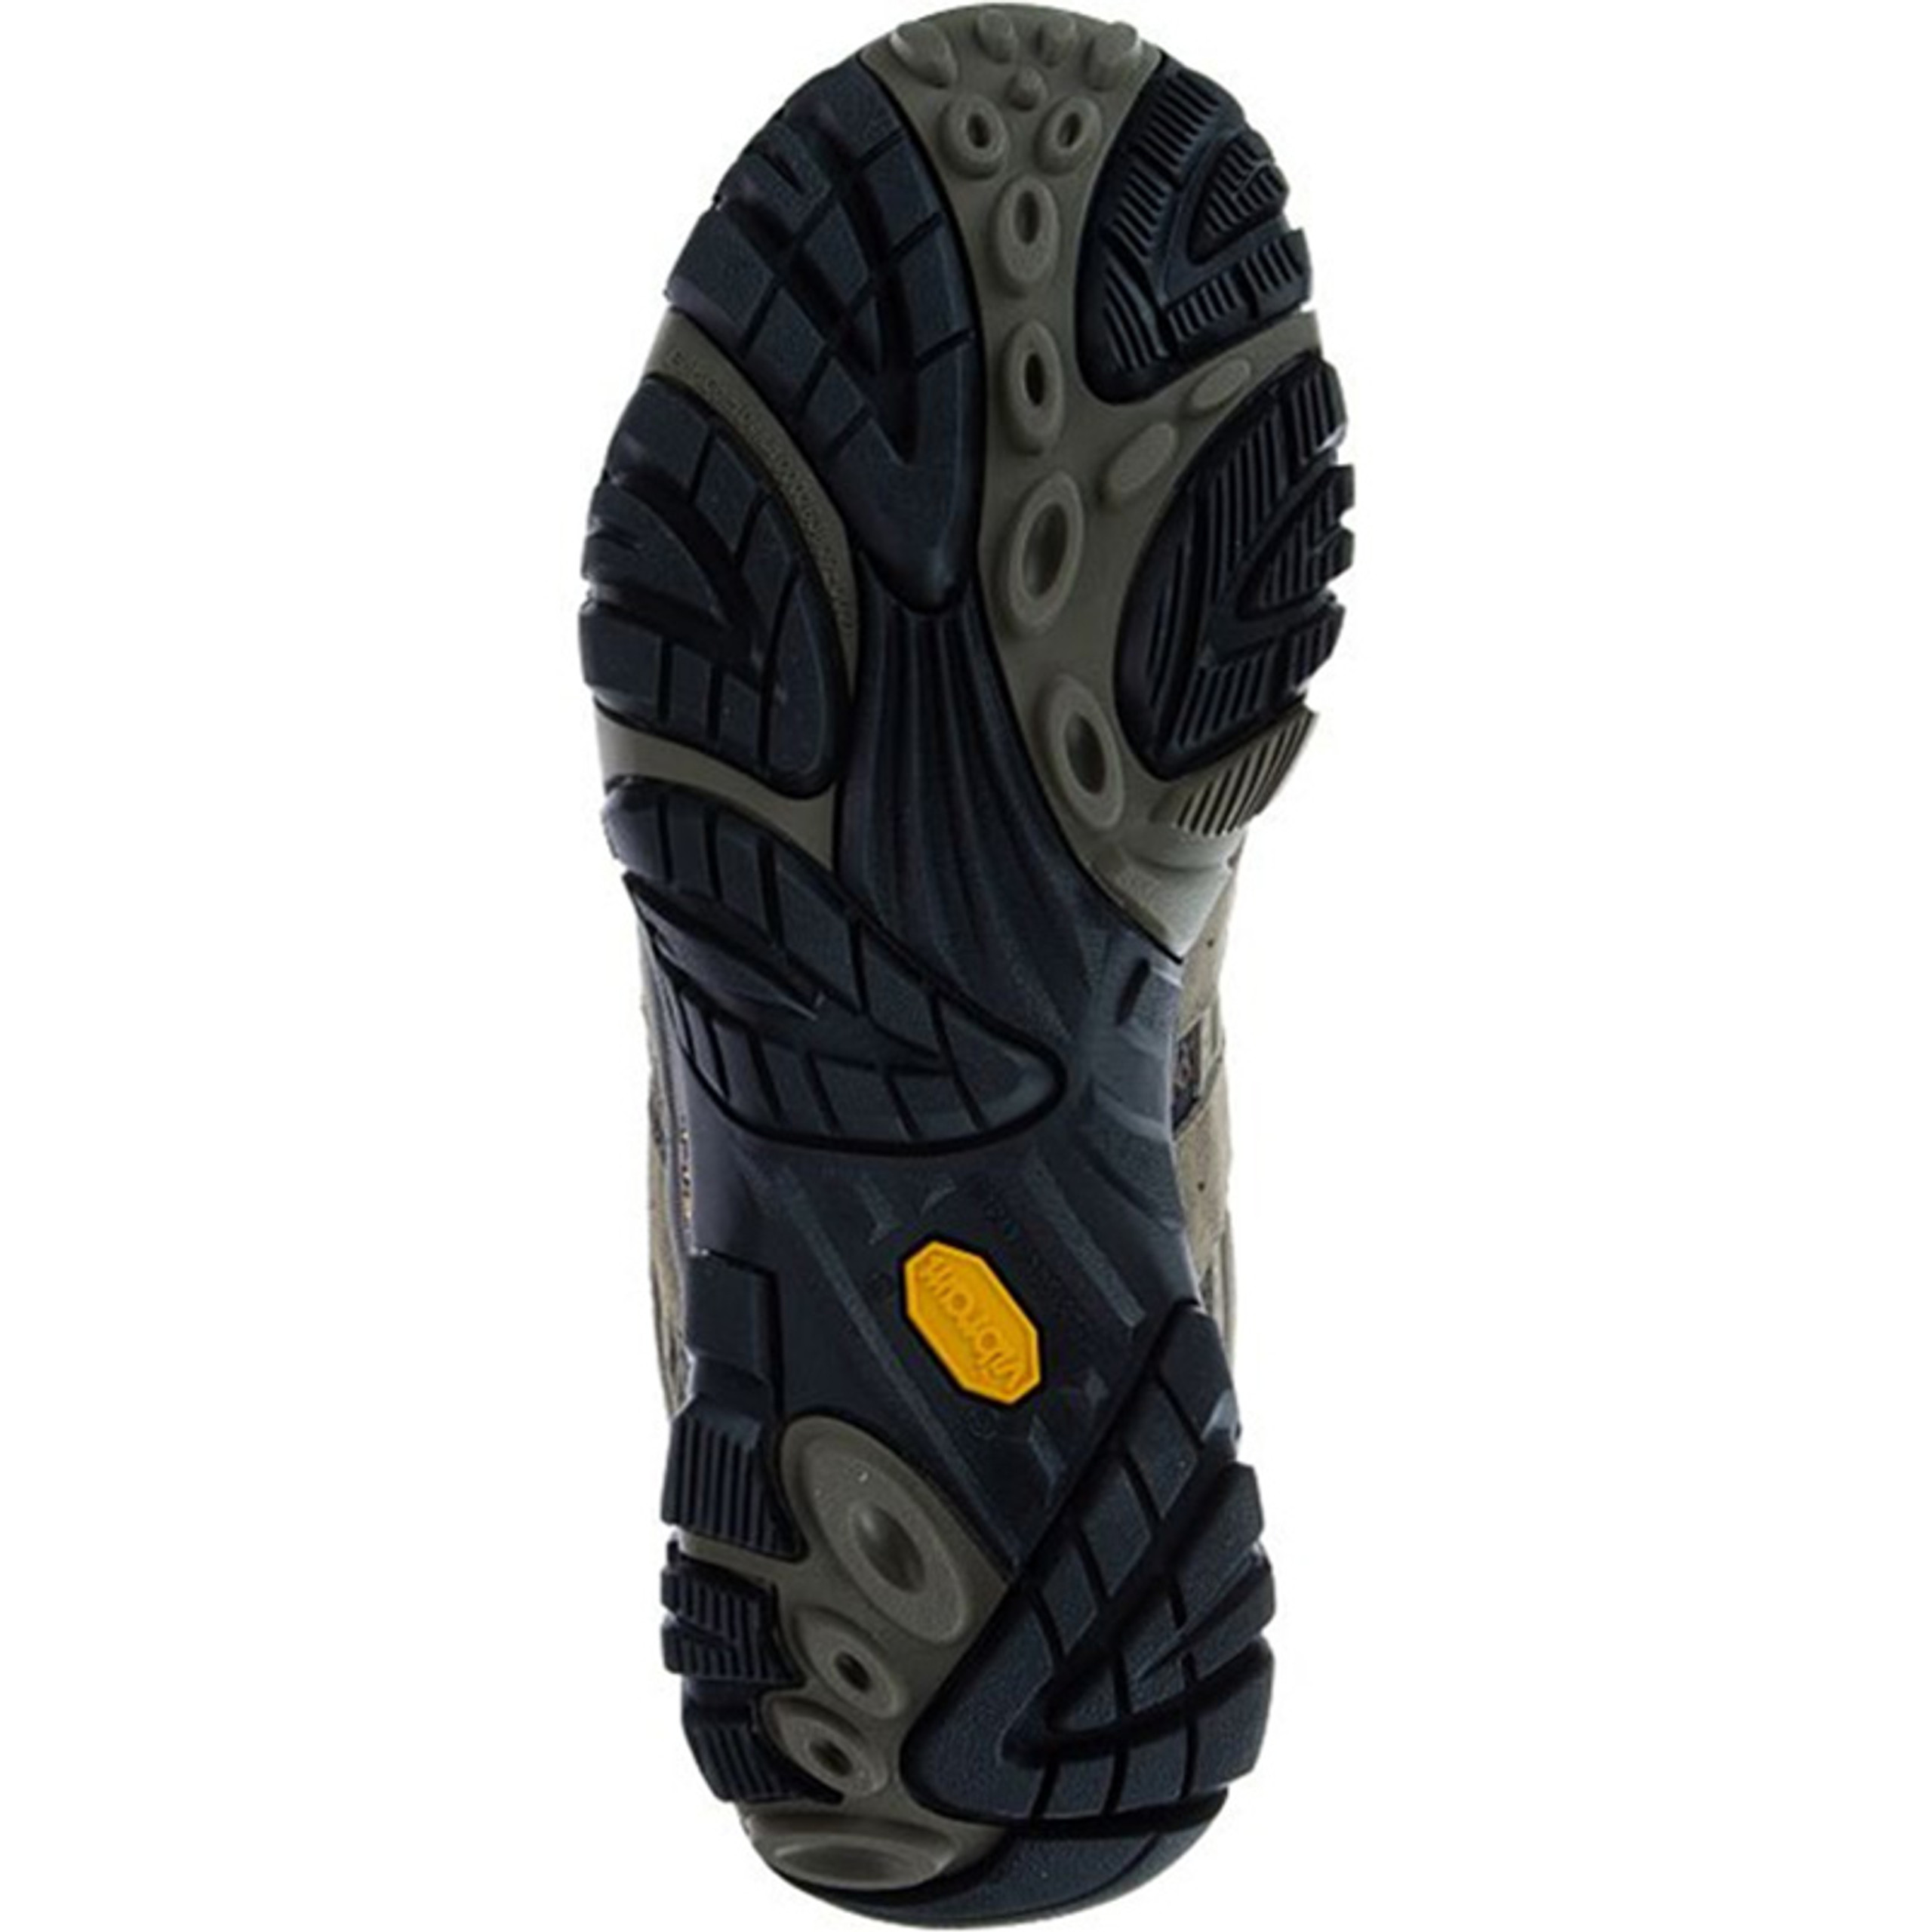 Merrell J06011 Men's MOAB 2 VENTILATOR Hiking Shoes - Family Footwear ...